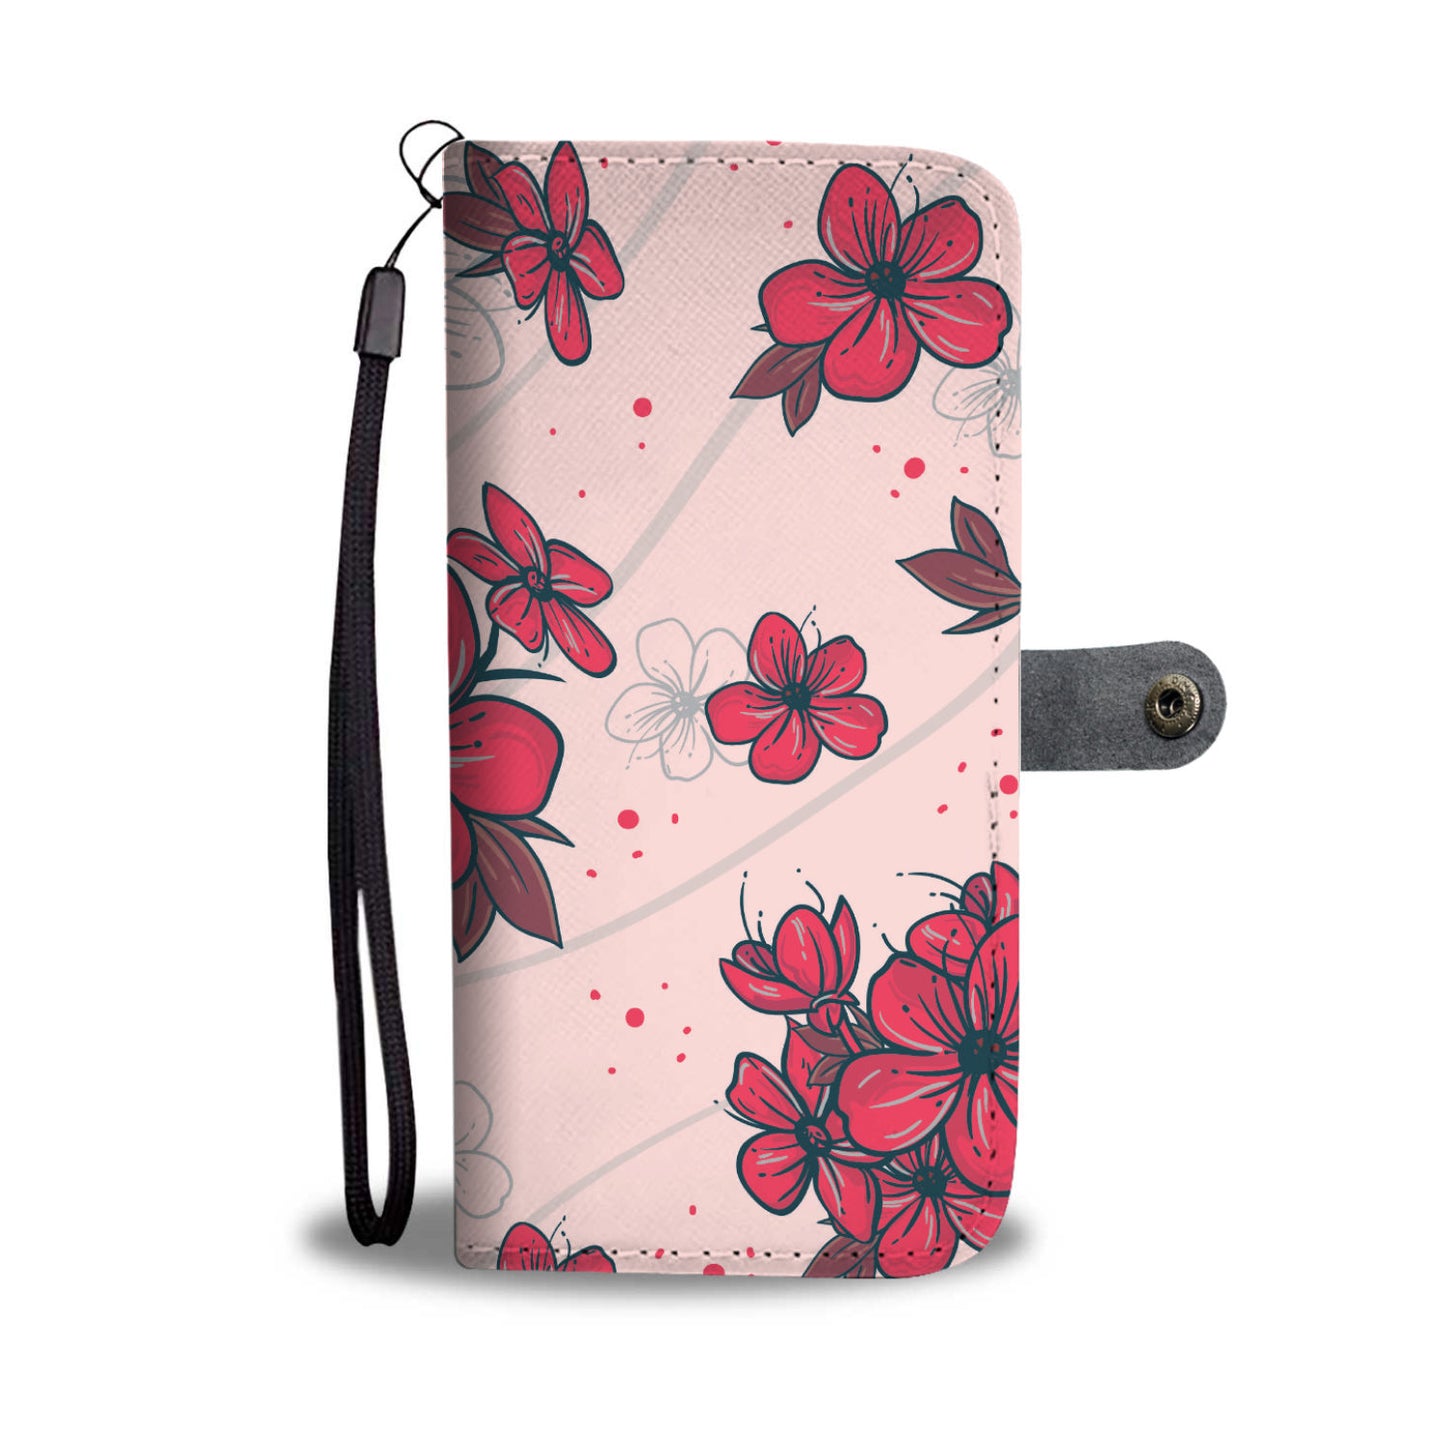 Plum Blossom Phone Wallet Case